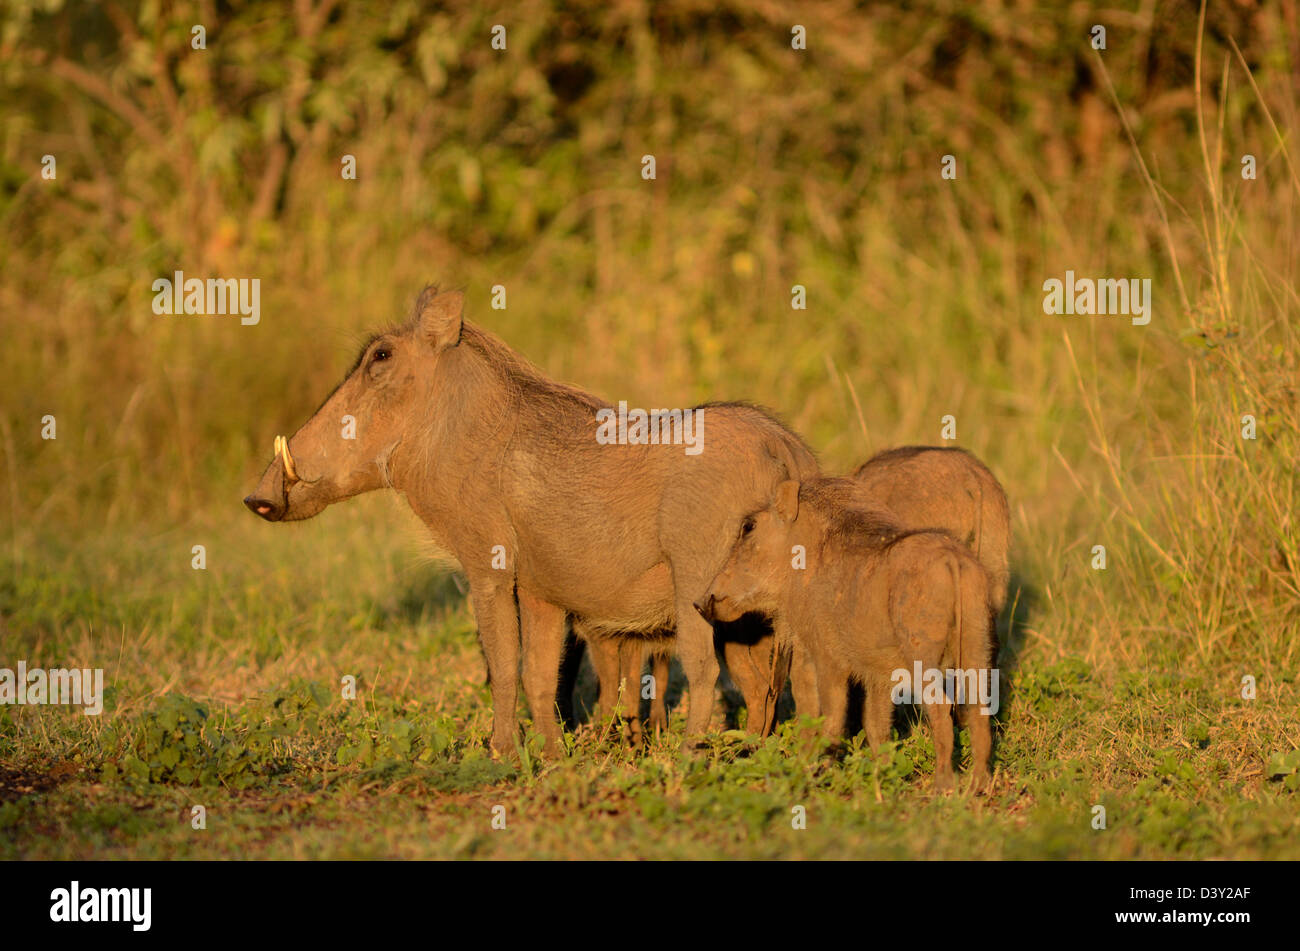 https://c8.alamy.com/comp/D3Y2AF/photos-of-africa-waterhog-family-D3Y2AF.jpg